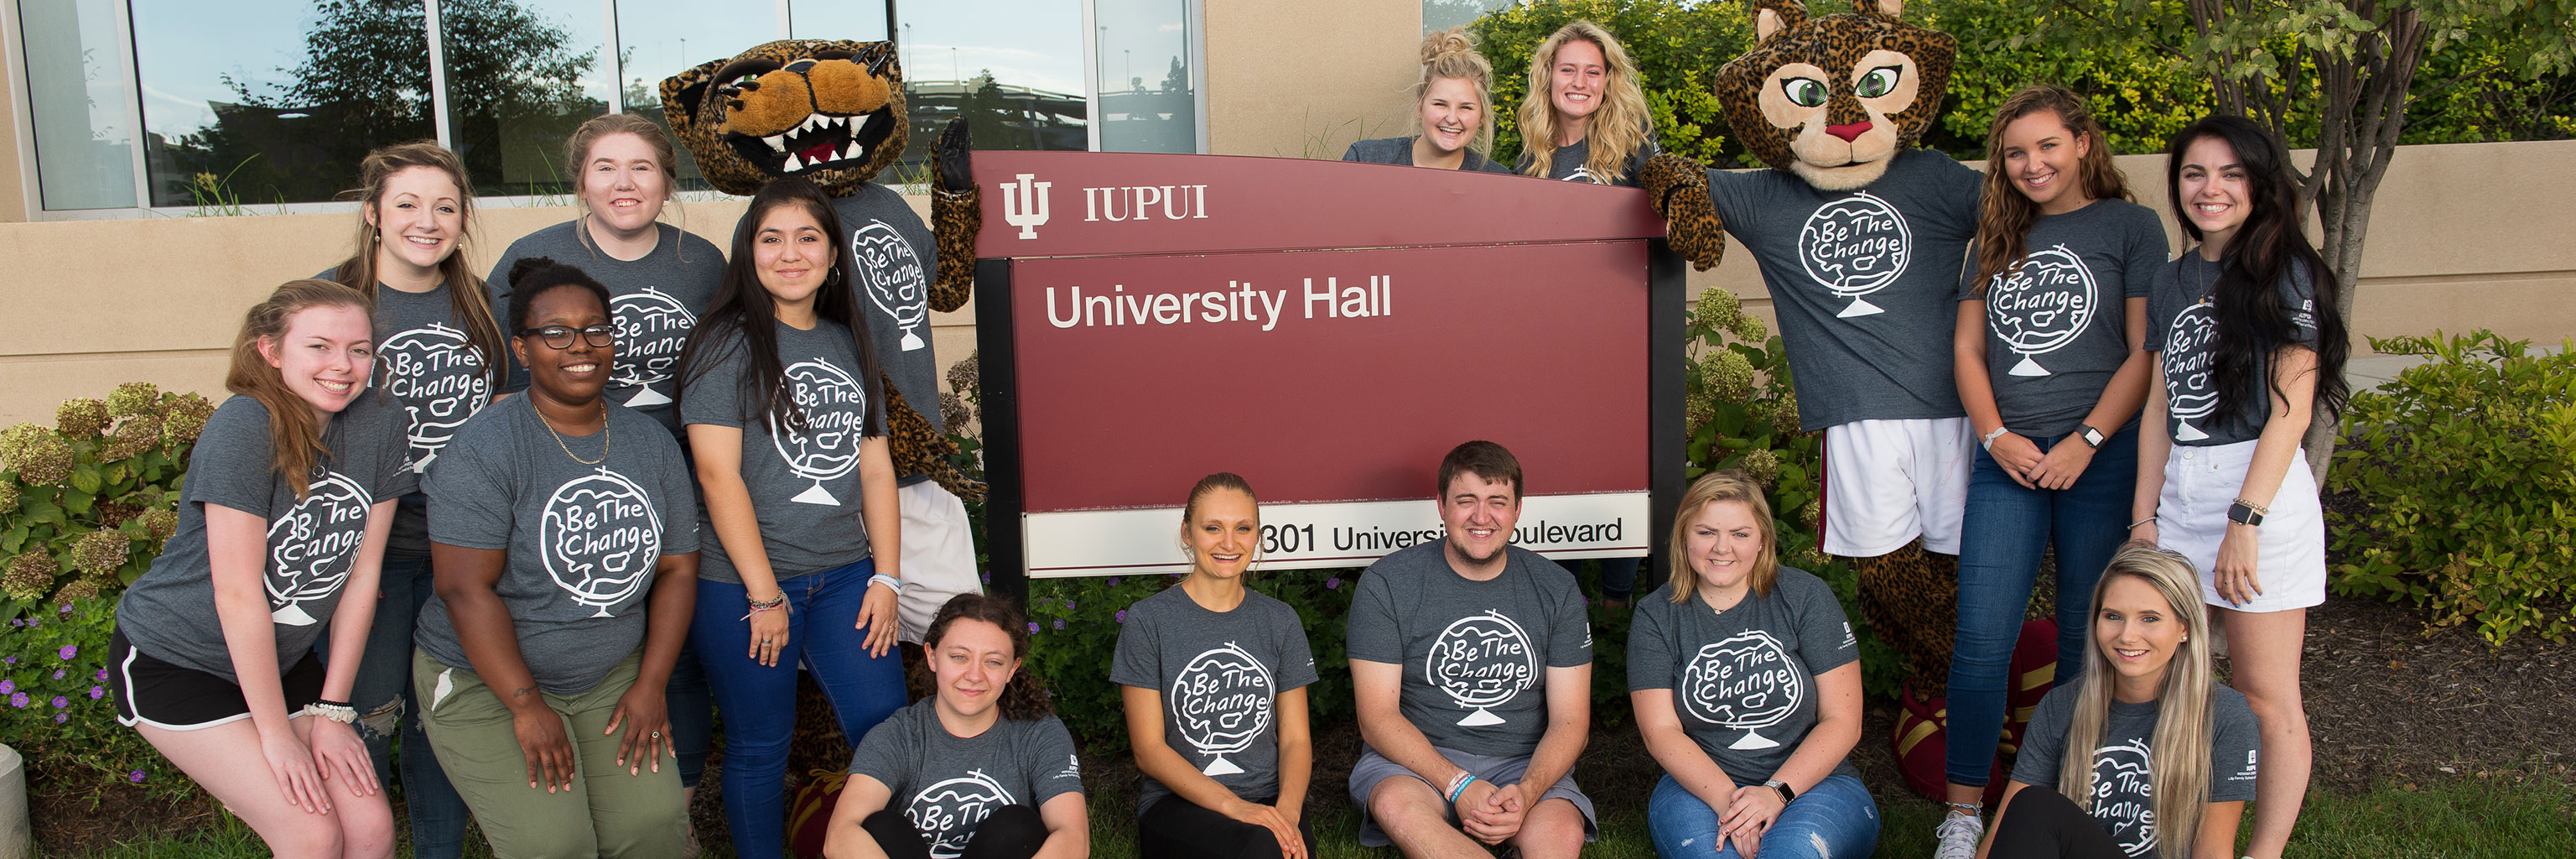 Students and IUPUI mascots at University Hall